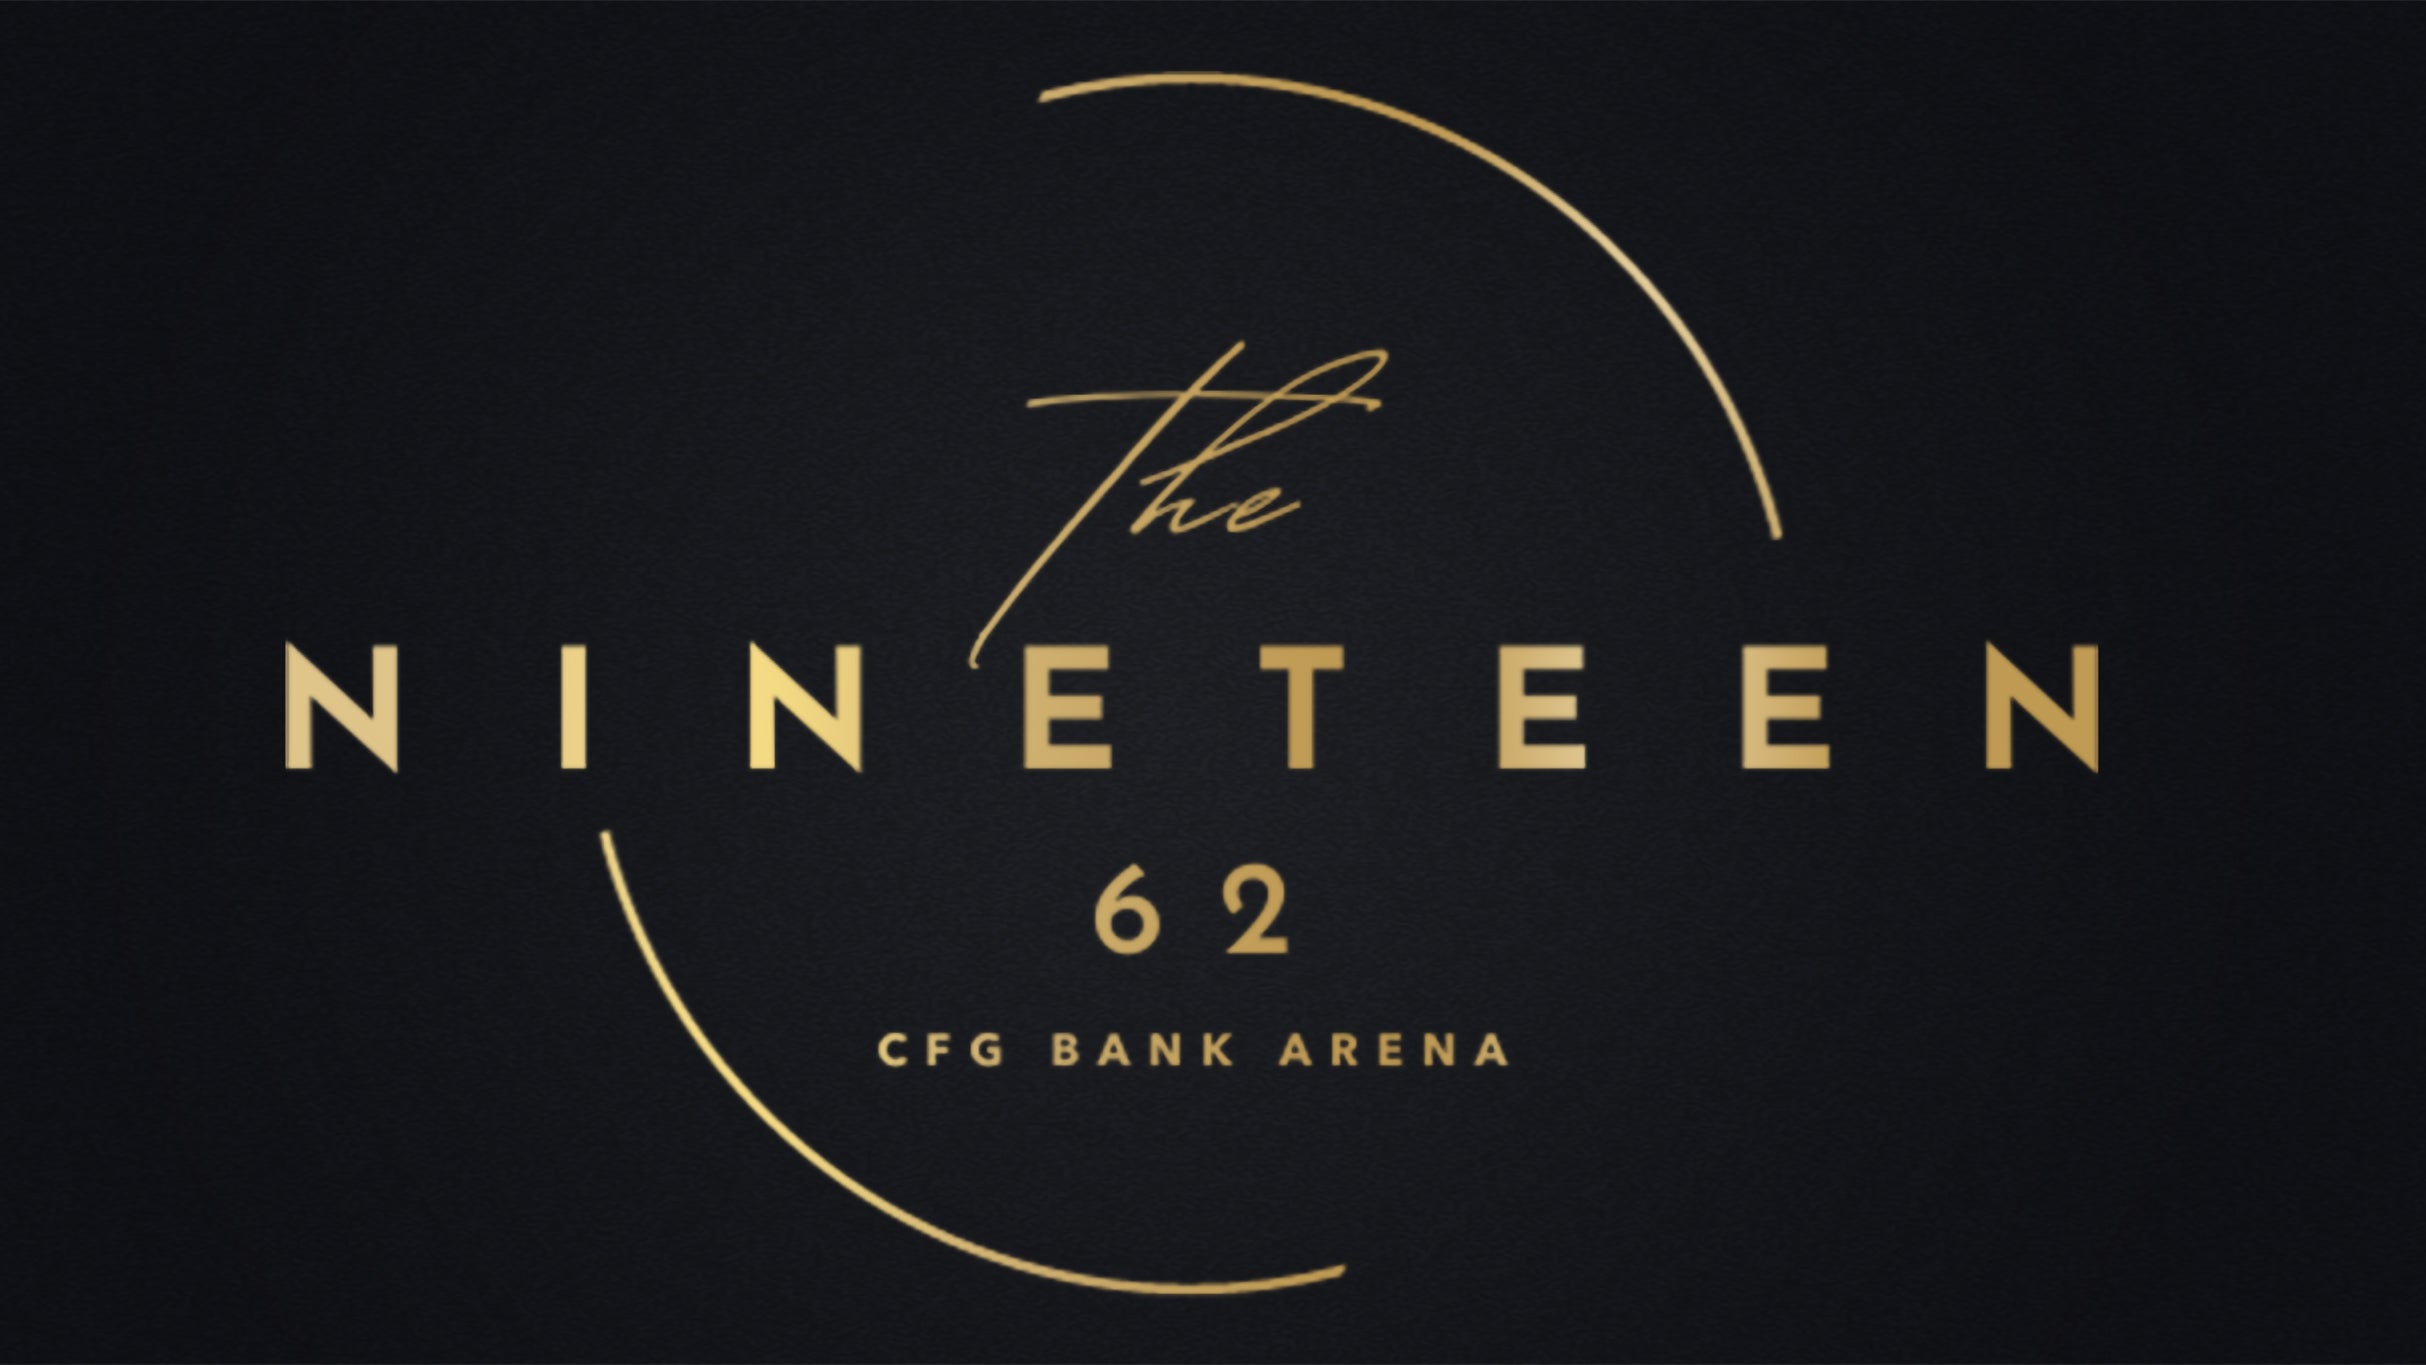 The Nineteen 62 At CFG Bank Arena - Justin Timberlake presales in Baltimore